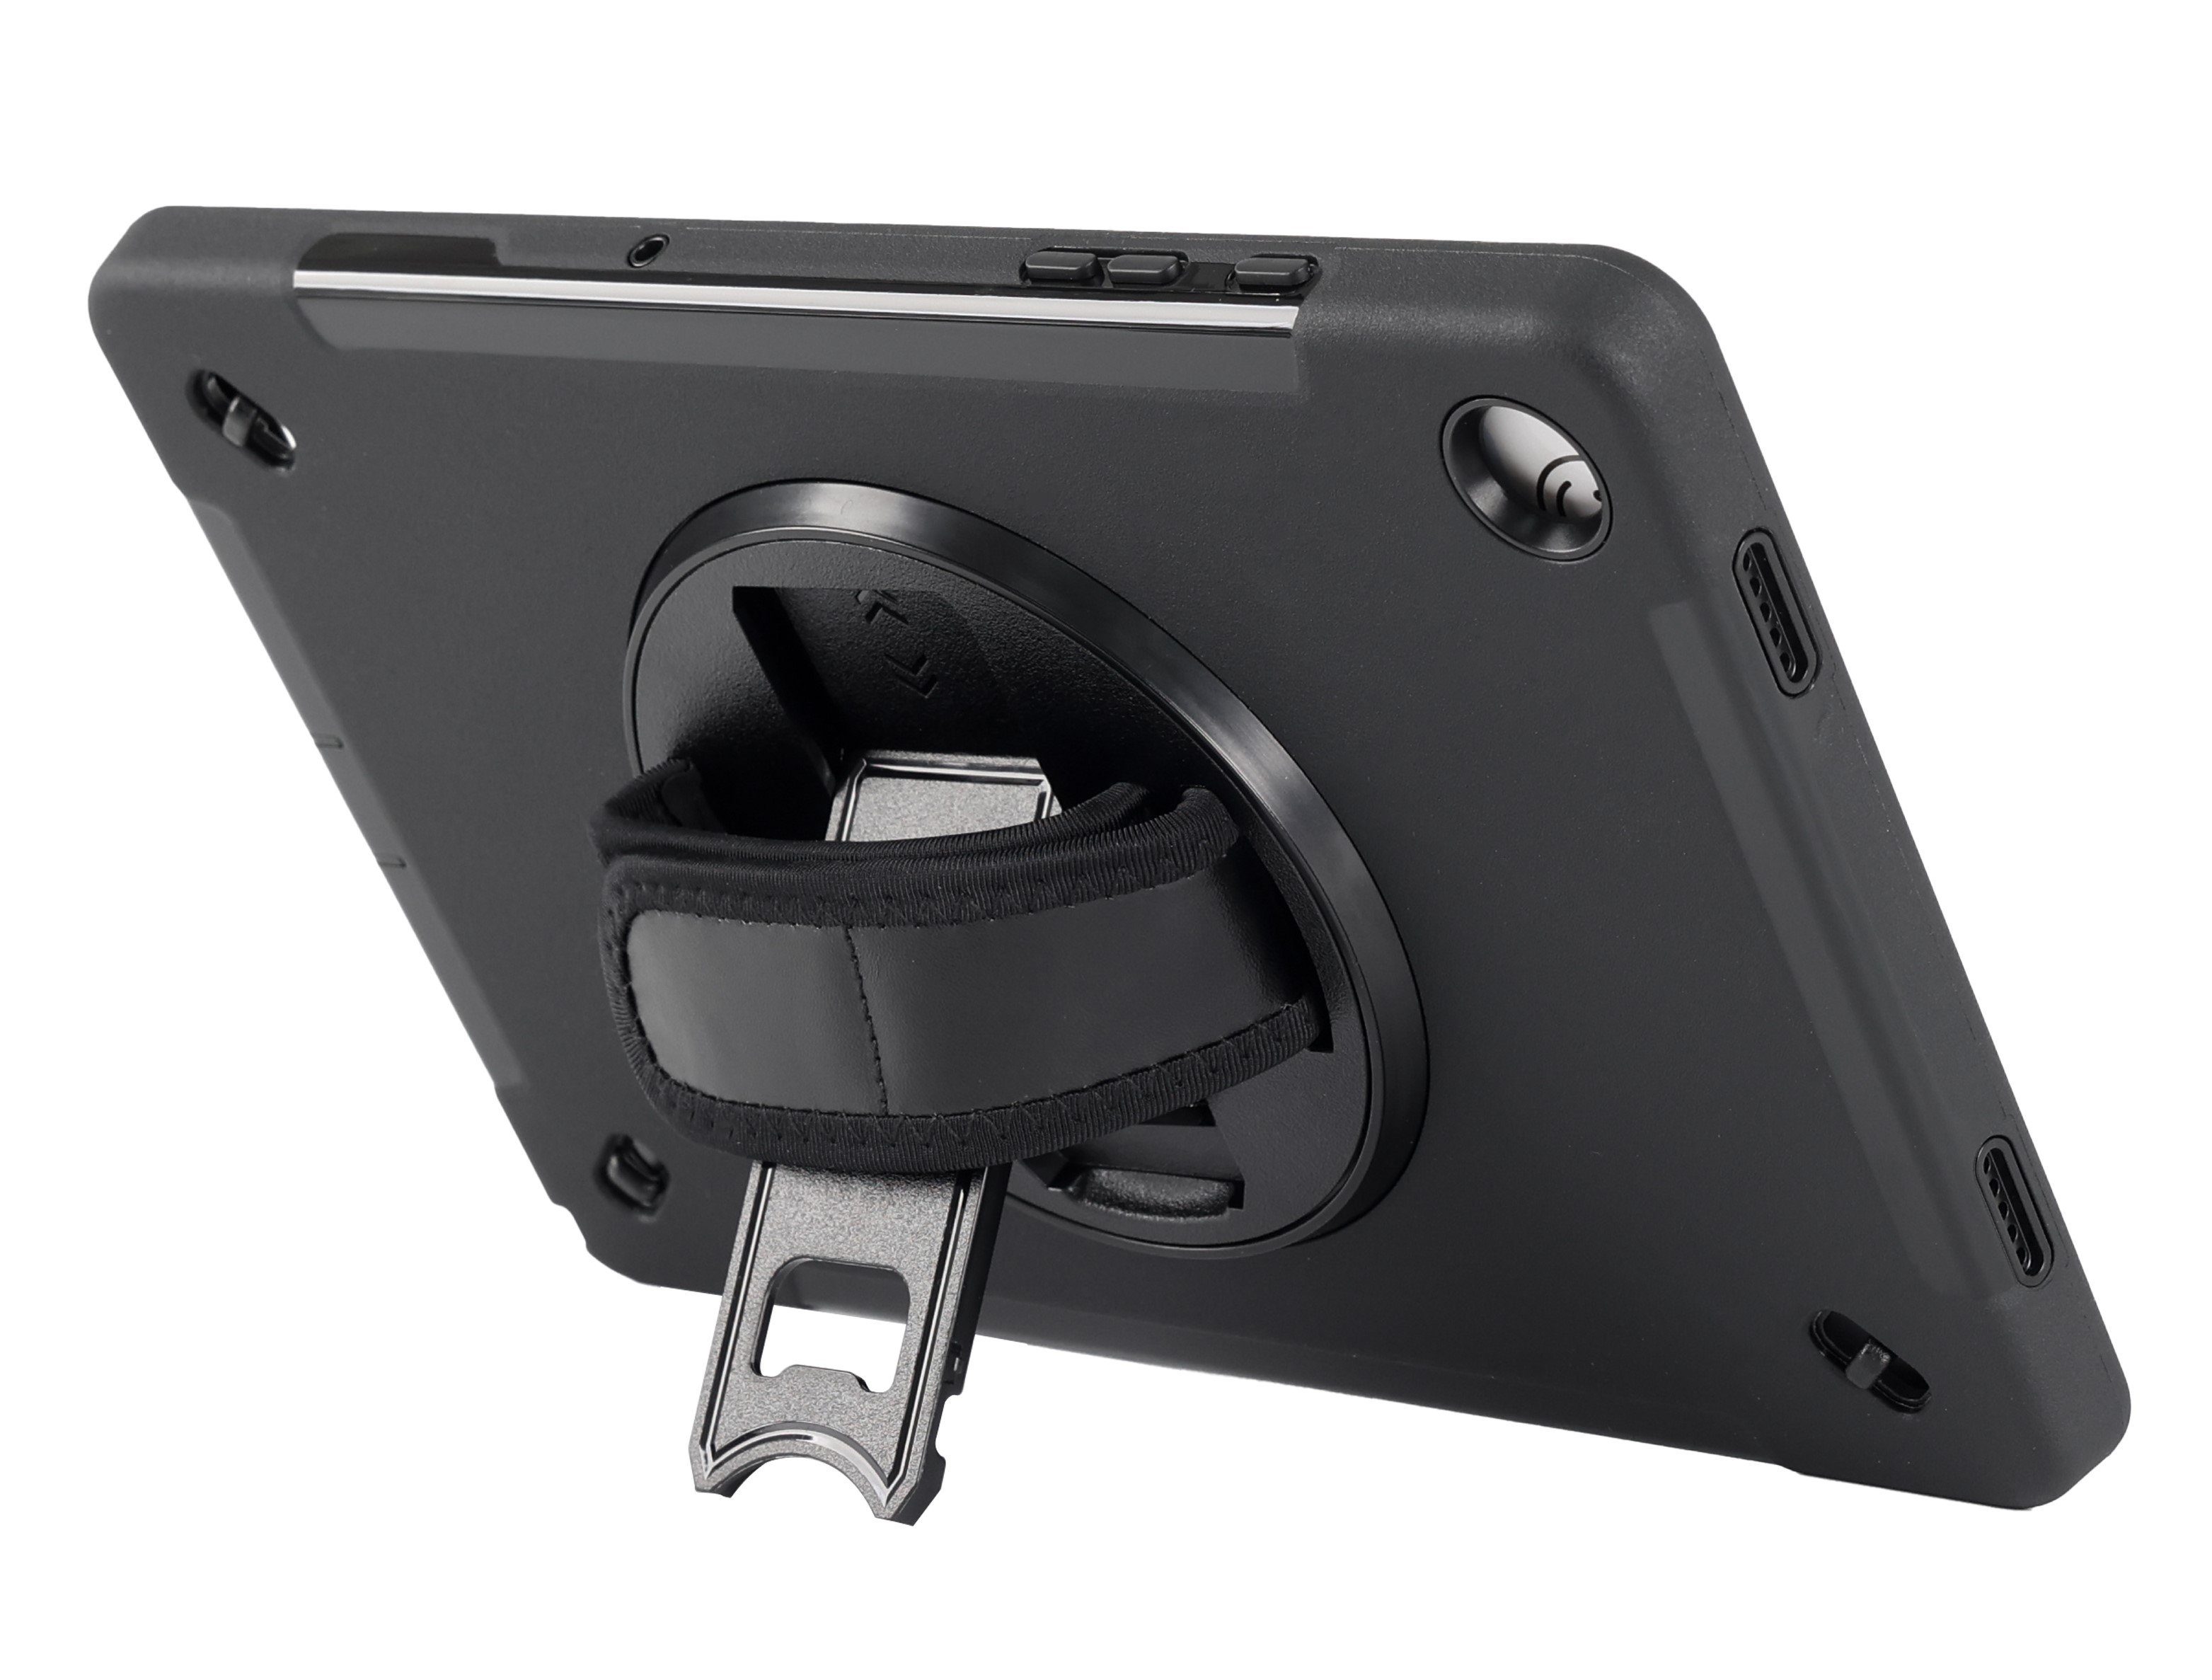 Für Samsung Galaxy Tab A9 Silikon Hybrid Tablet Hülle Halterung